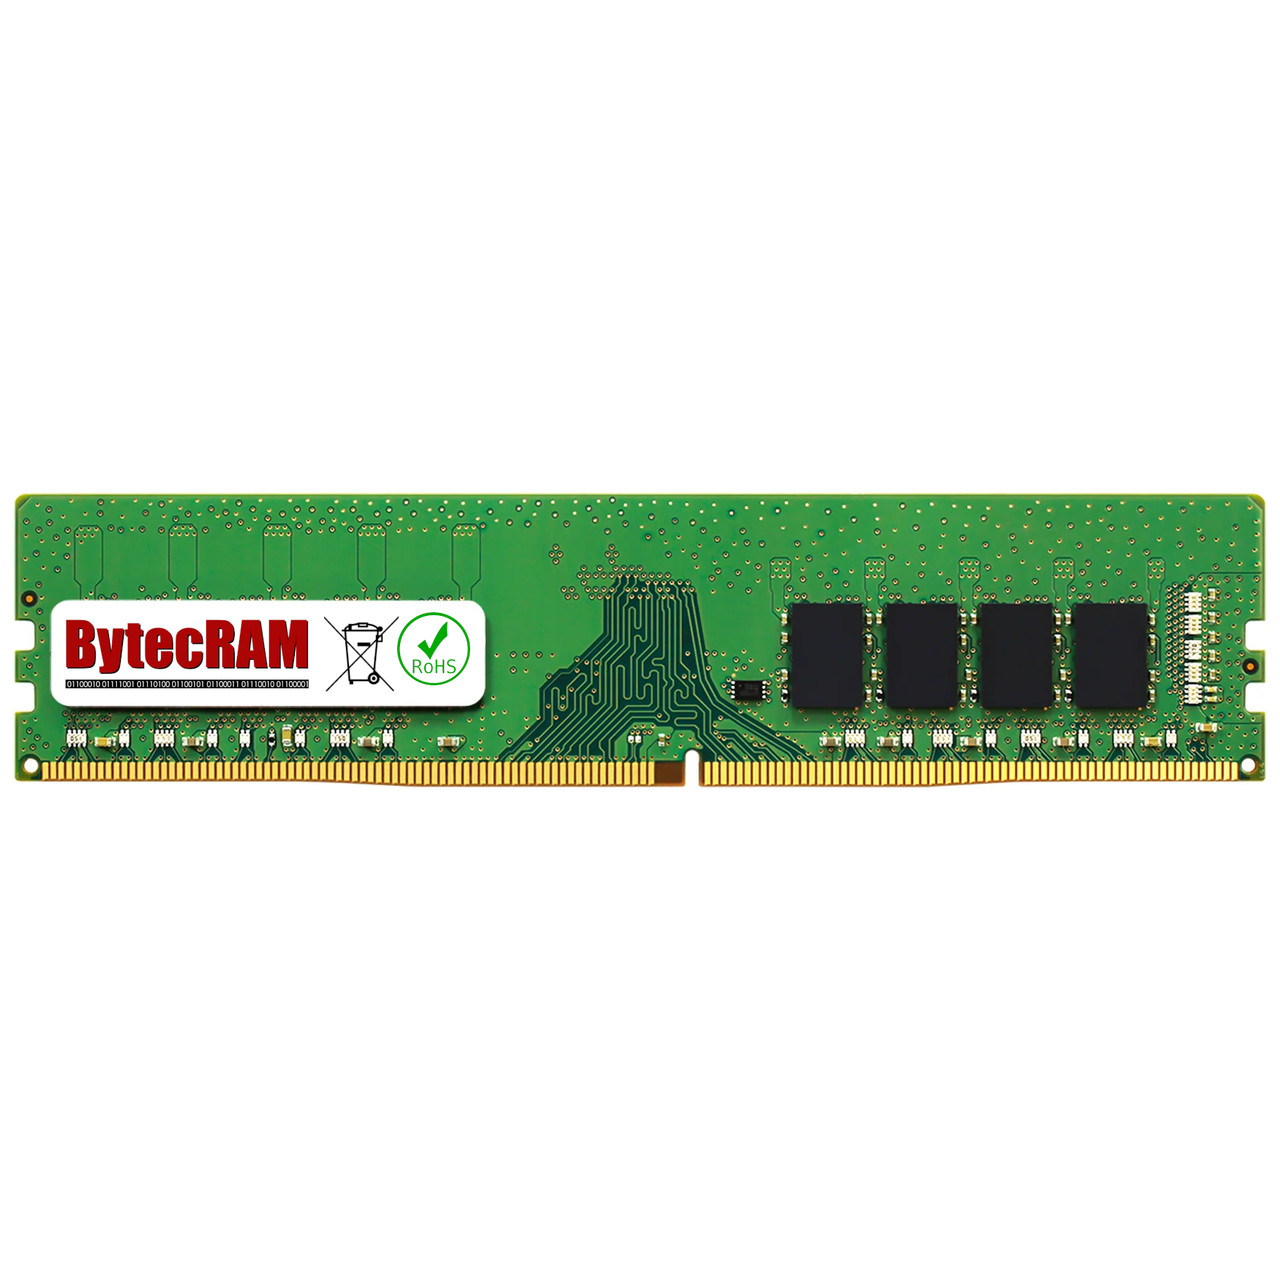 eBay*16GB Acer Predator PO3-620-UR13 DDR4 2666MHz UDIMM Memory RAM Upgrade